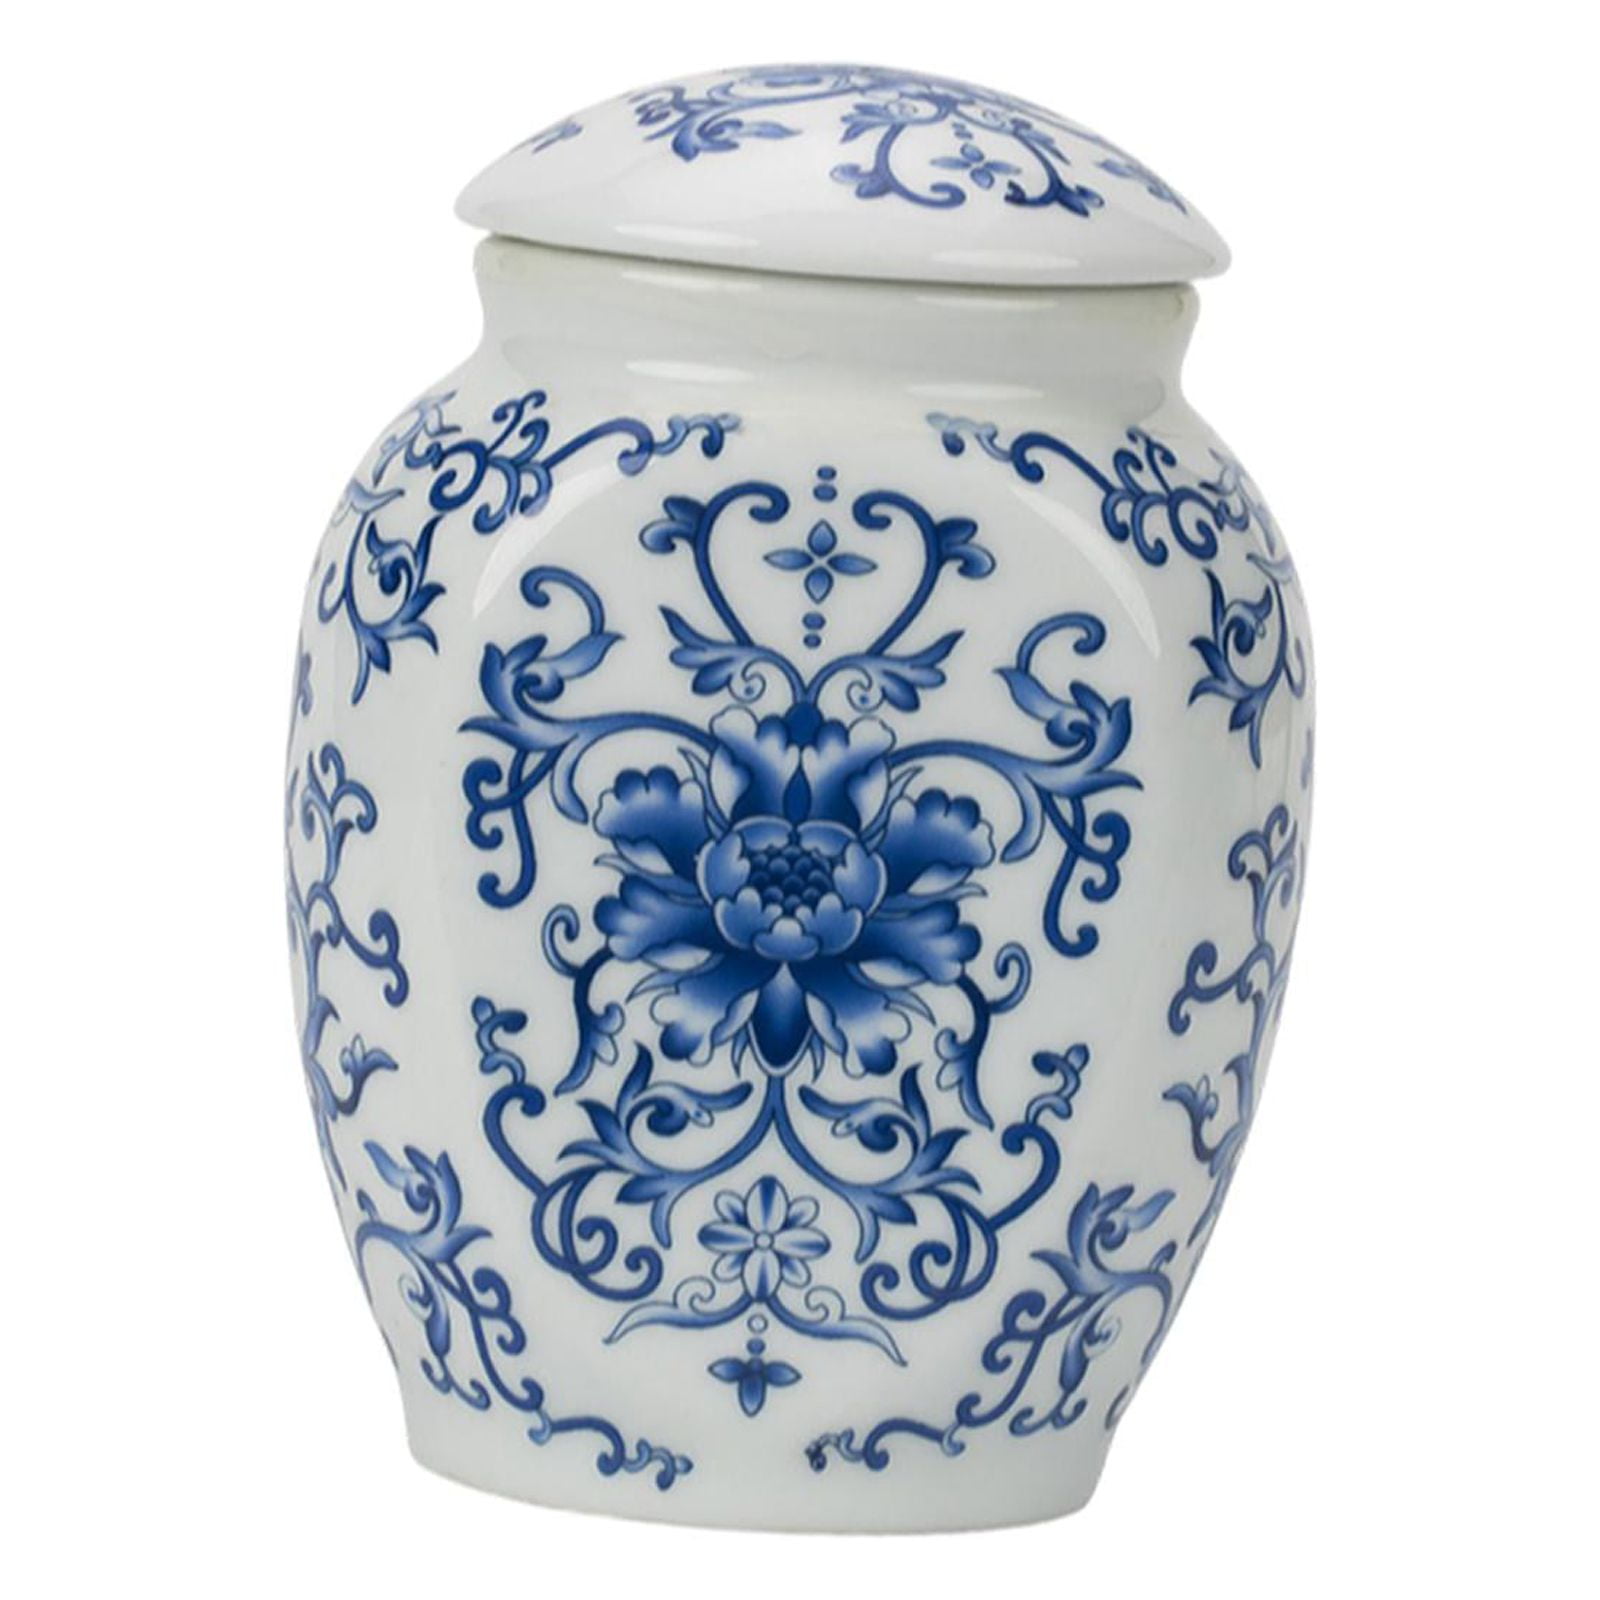 10 in. Oriental Furniture Floral Blue and White Porcelain Ginger Jar  BW-GJAR-BWFL - The Home Depot